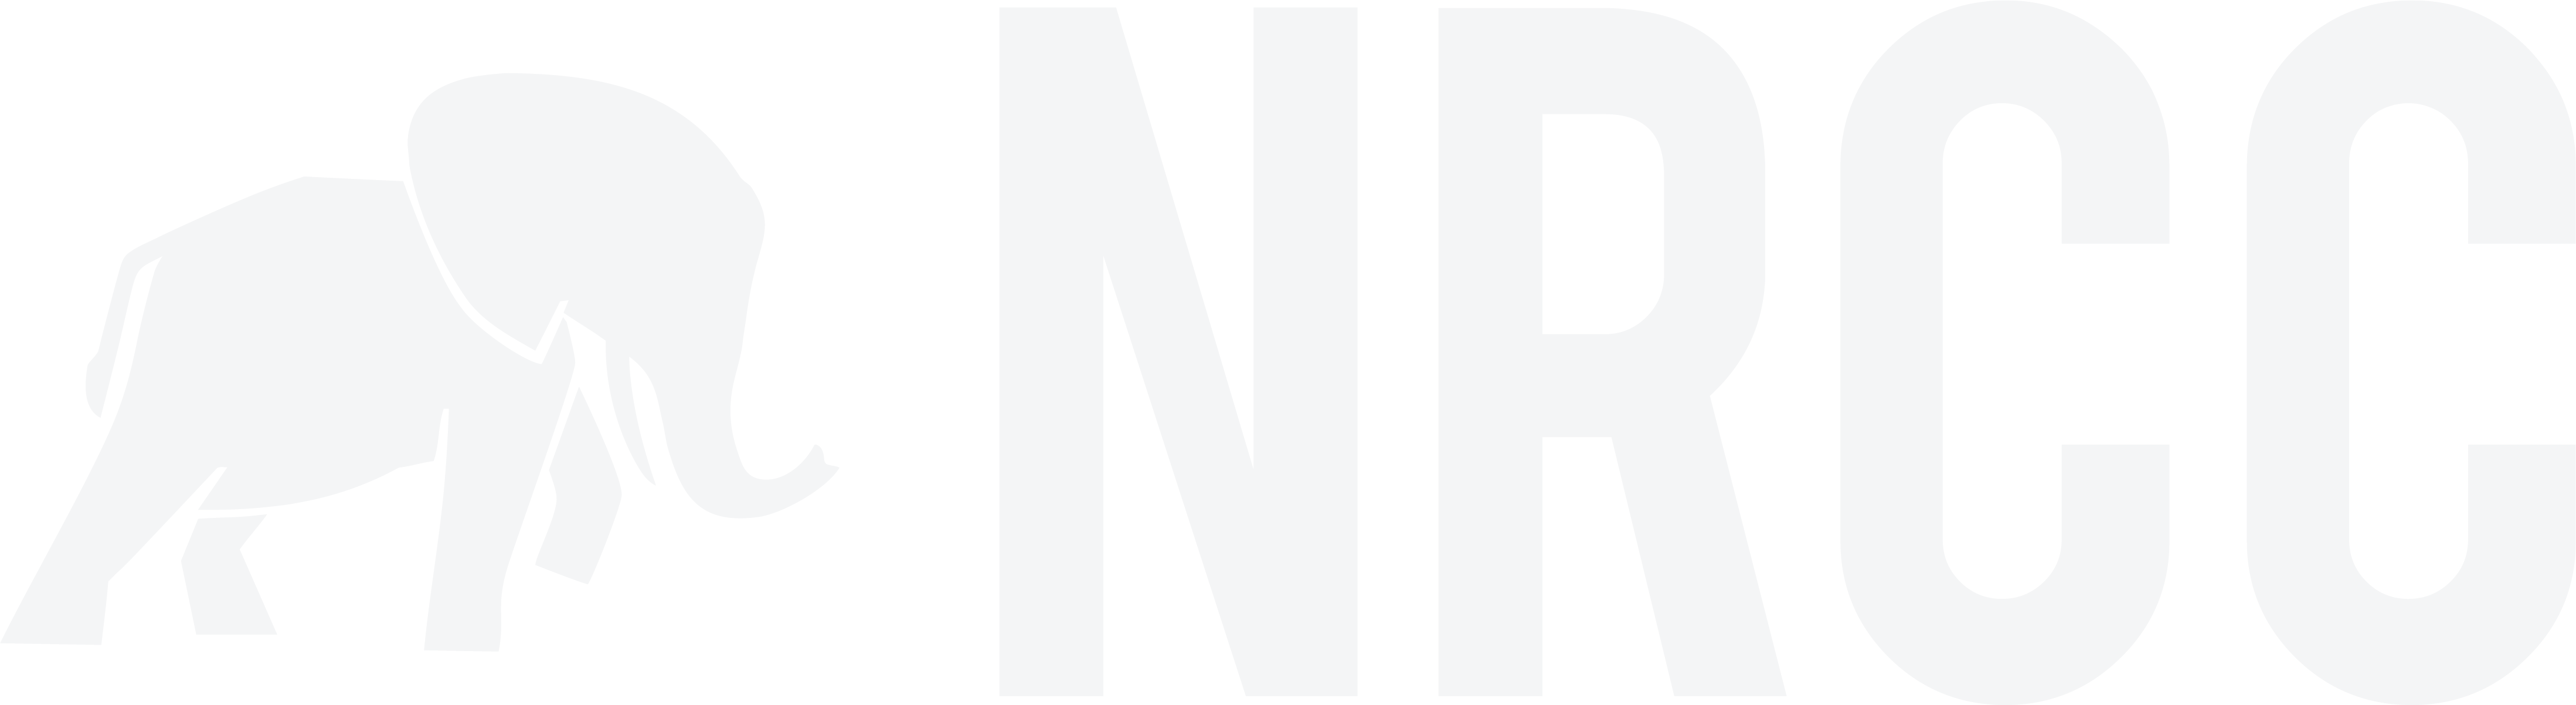 NRCC Logo - Contribute Republican Congressional Committee